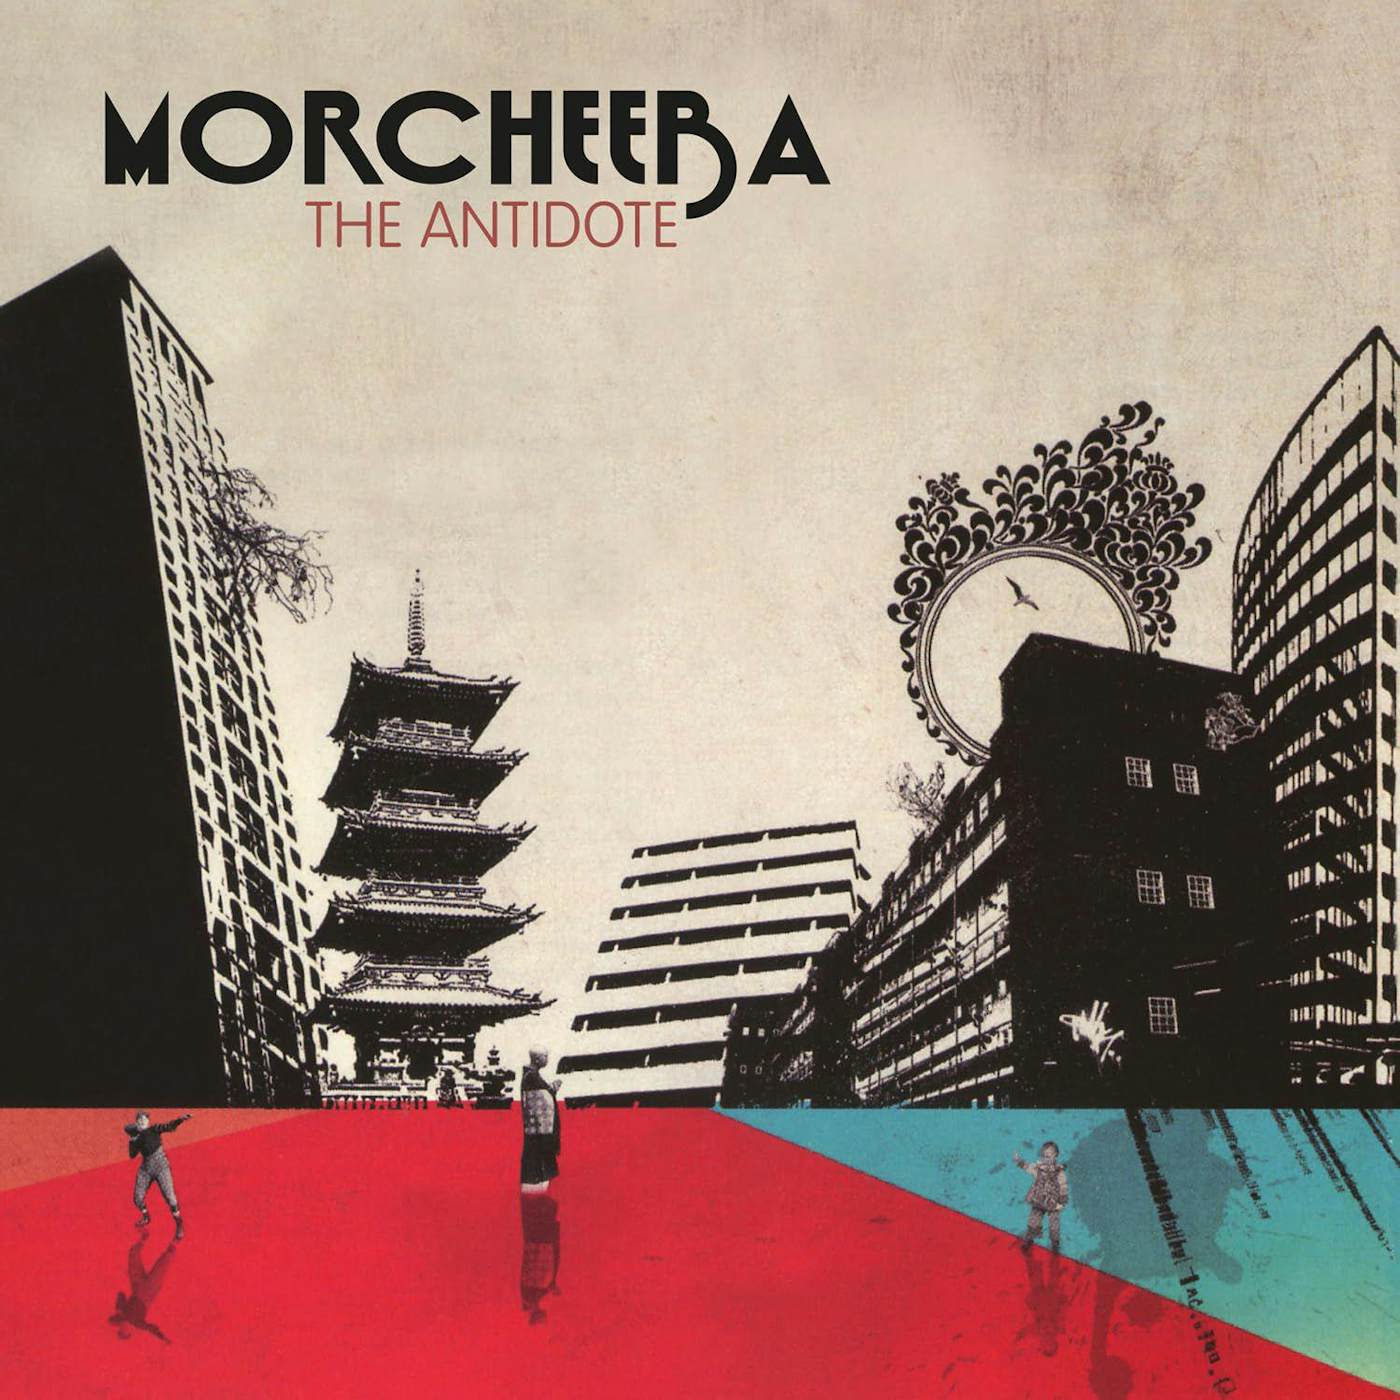 Morcheeba Antidote (180-Gram/Crystal Clear) Vinyl Record